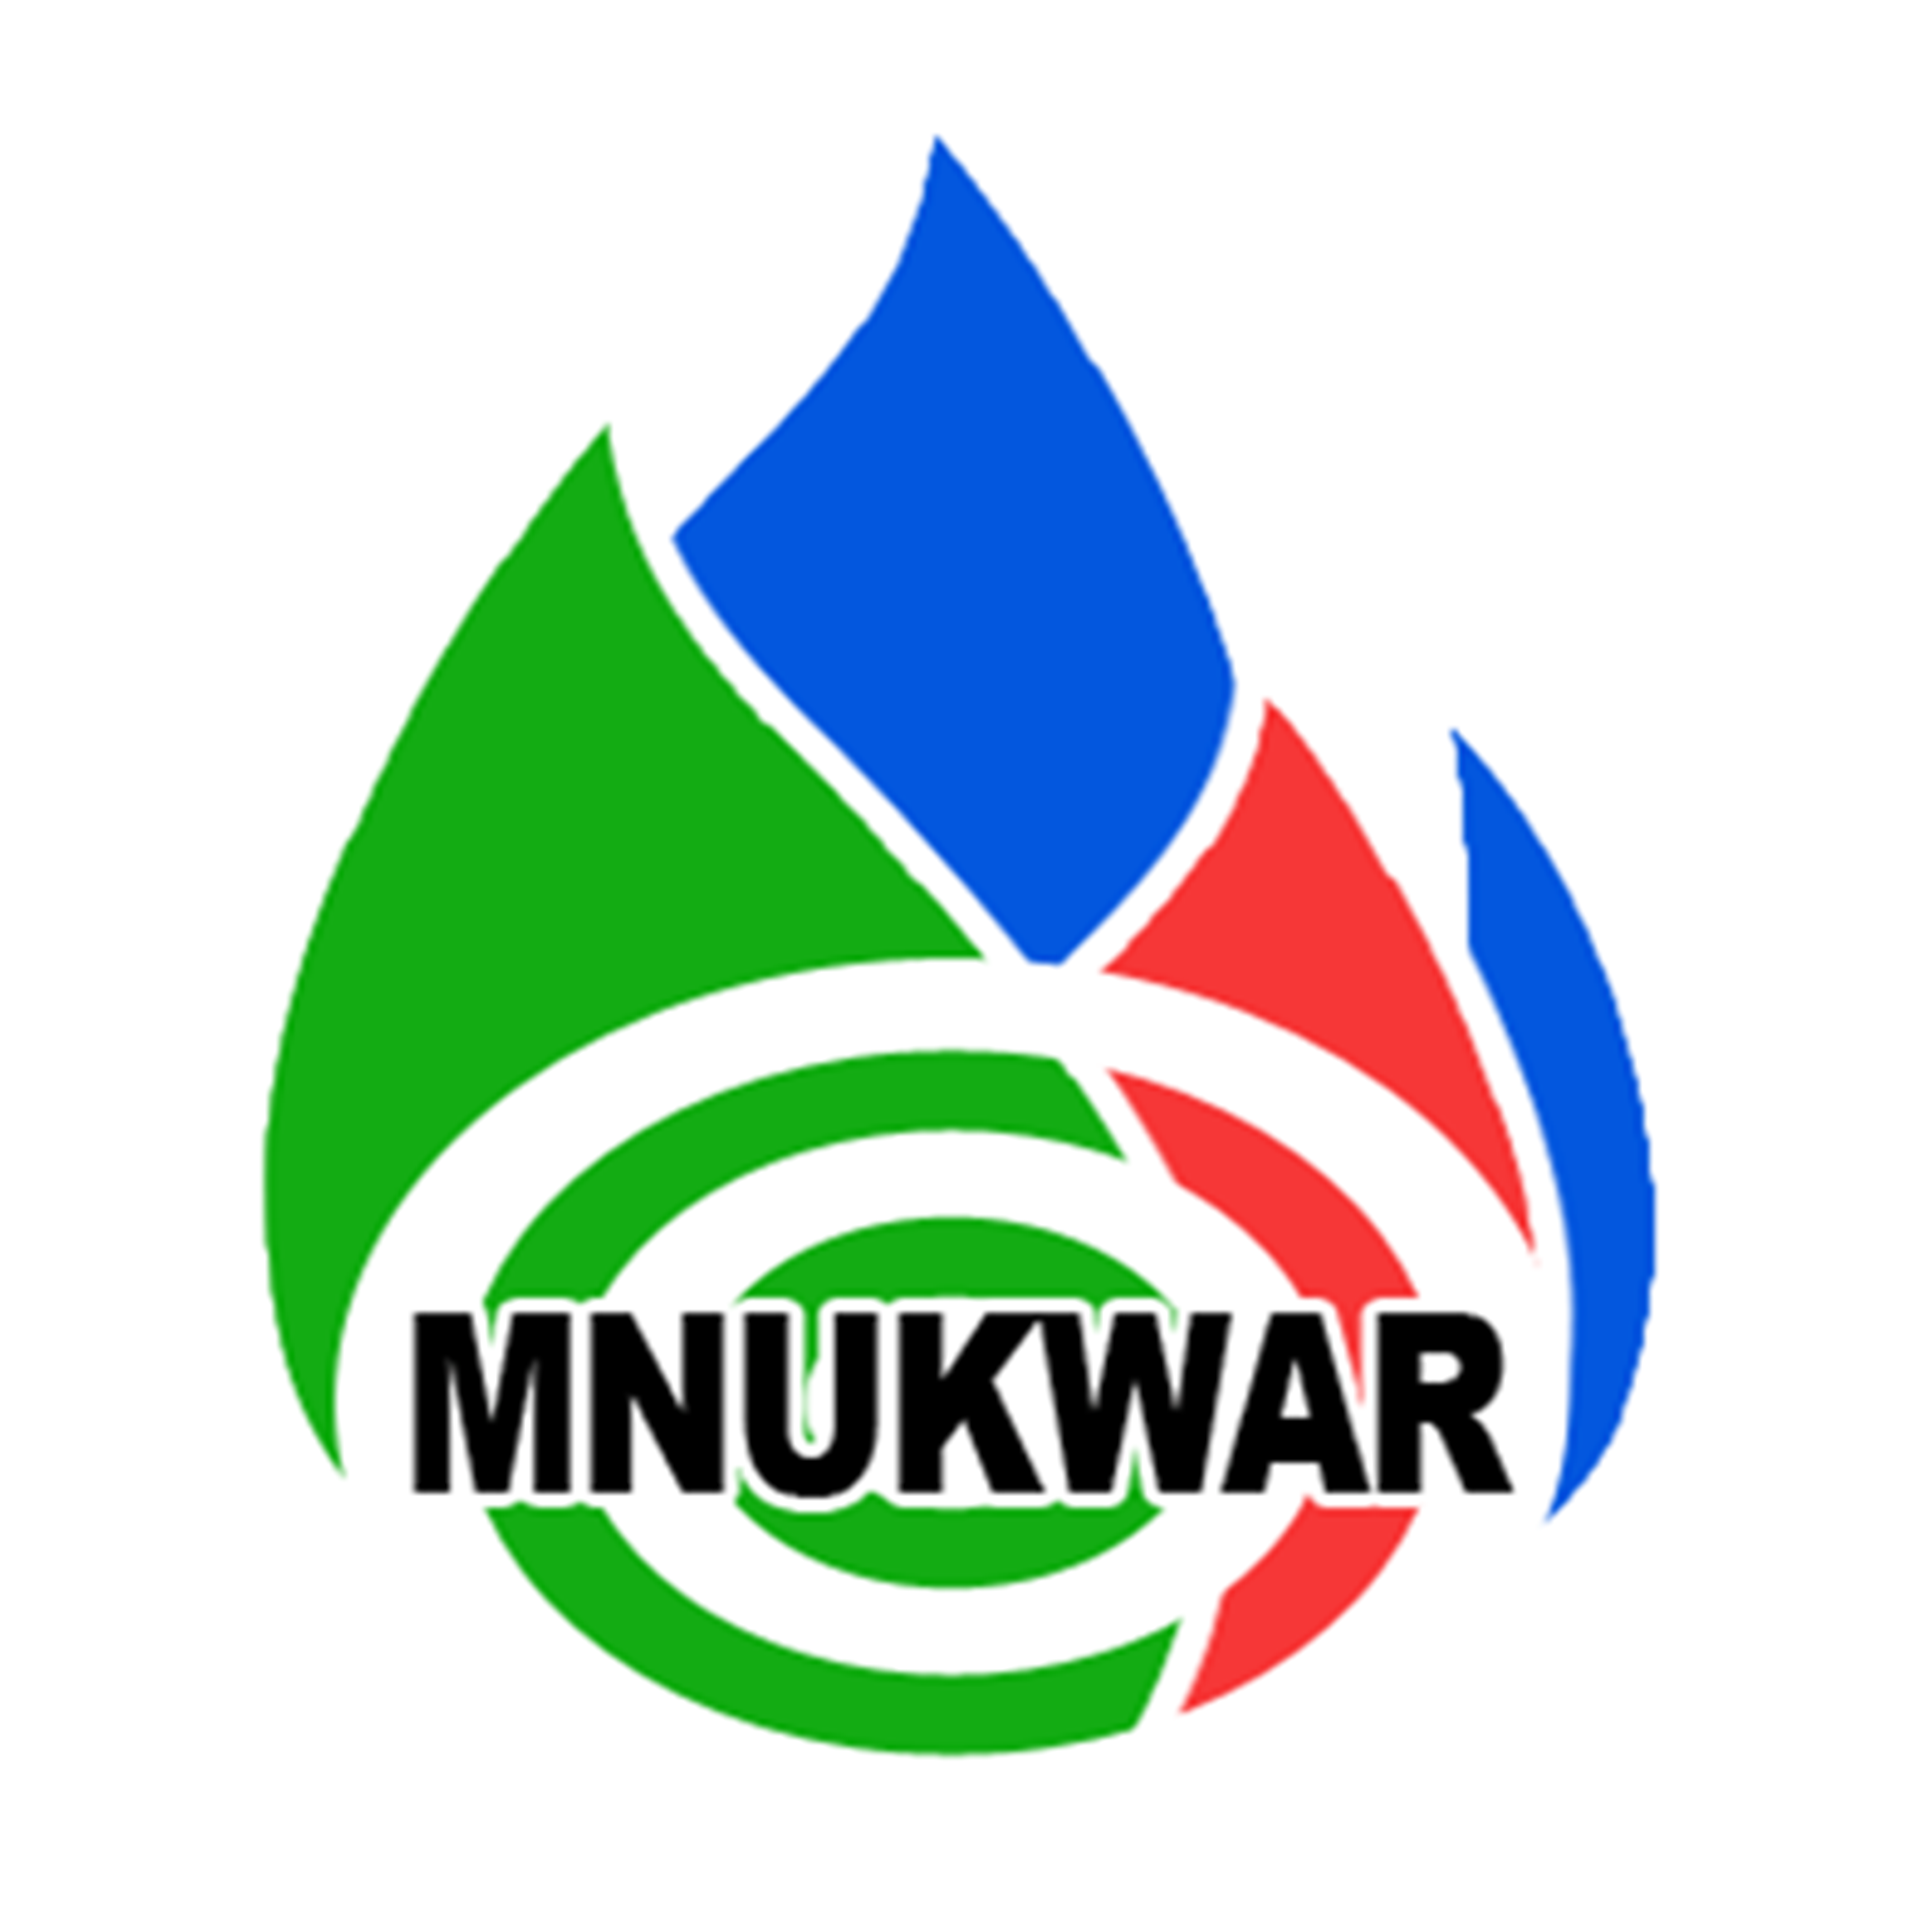 Mnukwar Papua